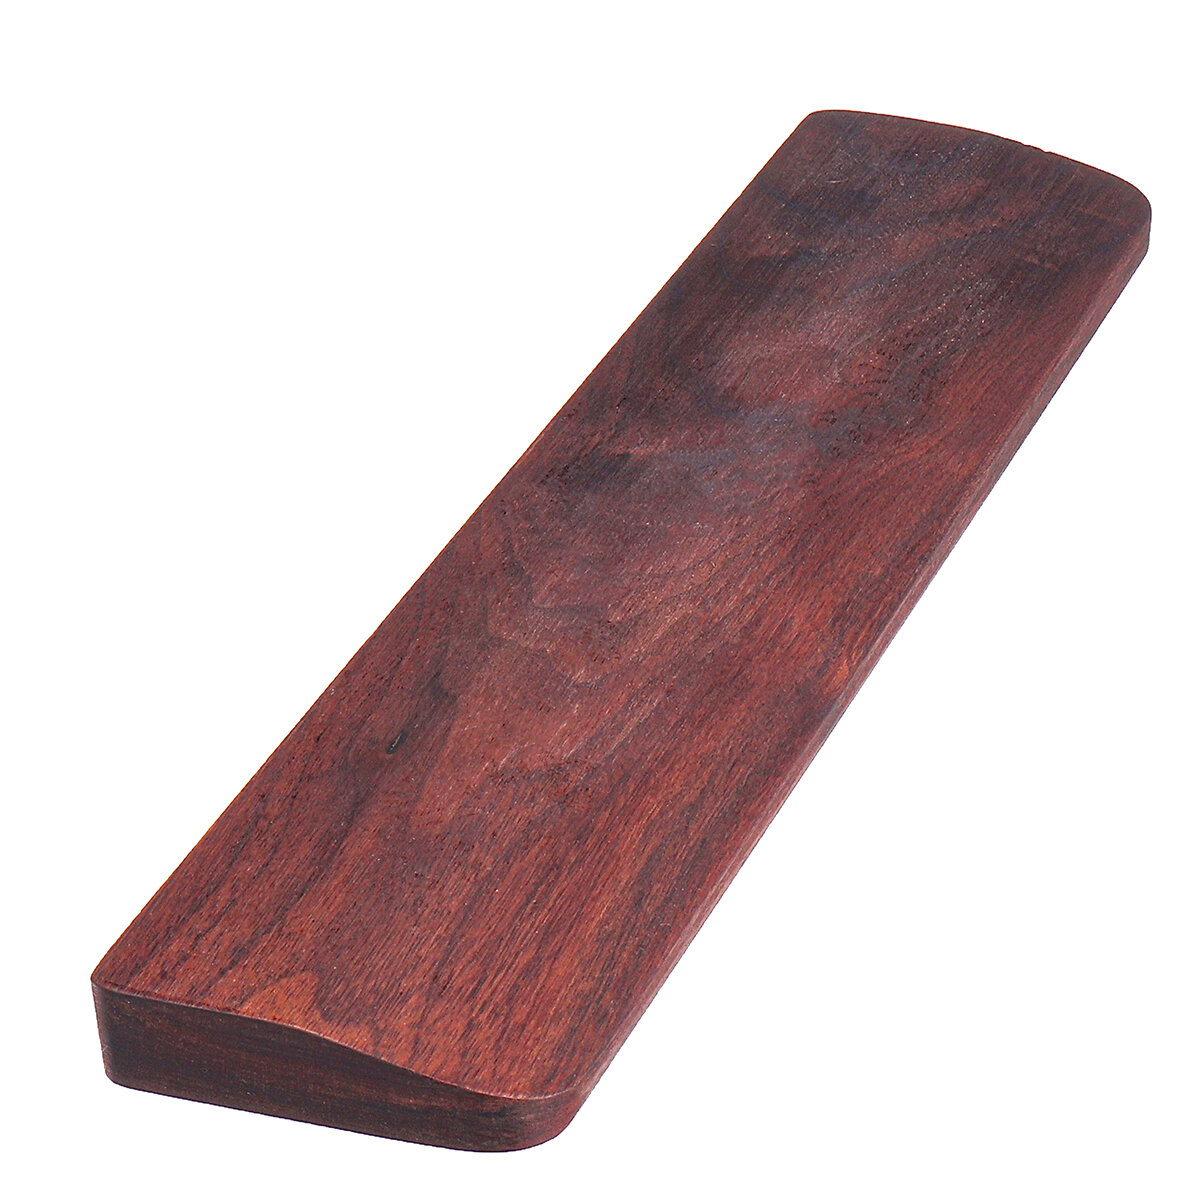 

87 104 Key Keyboard Wrist Rest Pad Walnut Natural Wood Antiskid Black Wooden Hand Protection